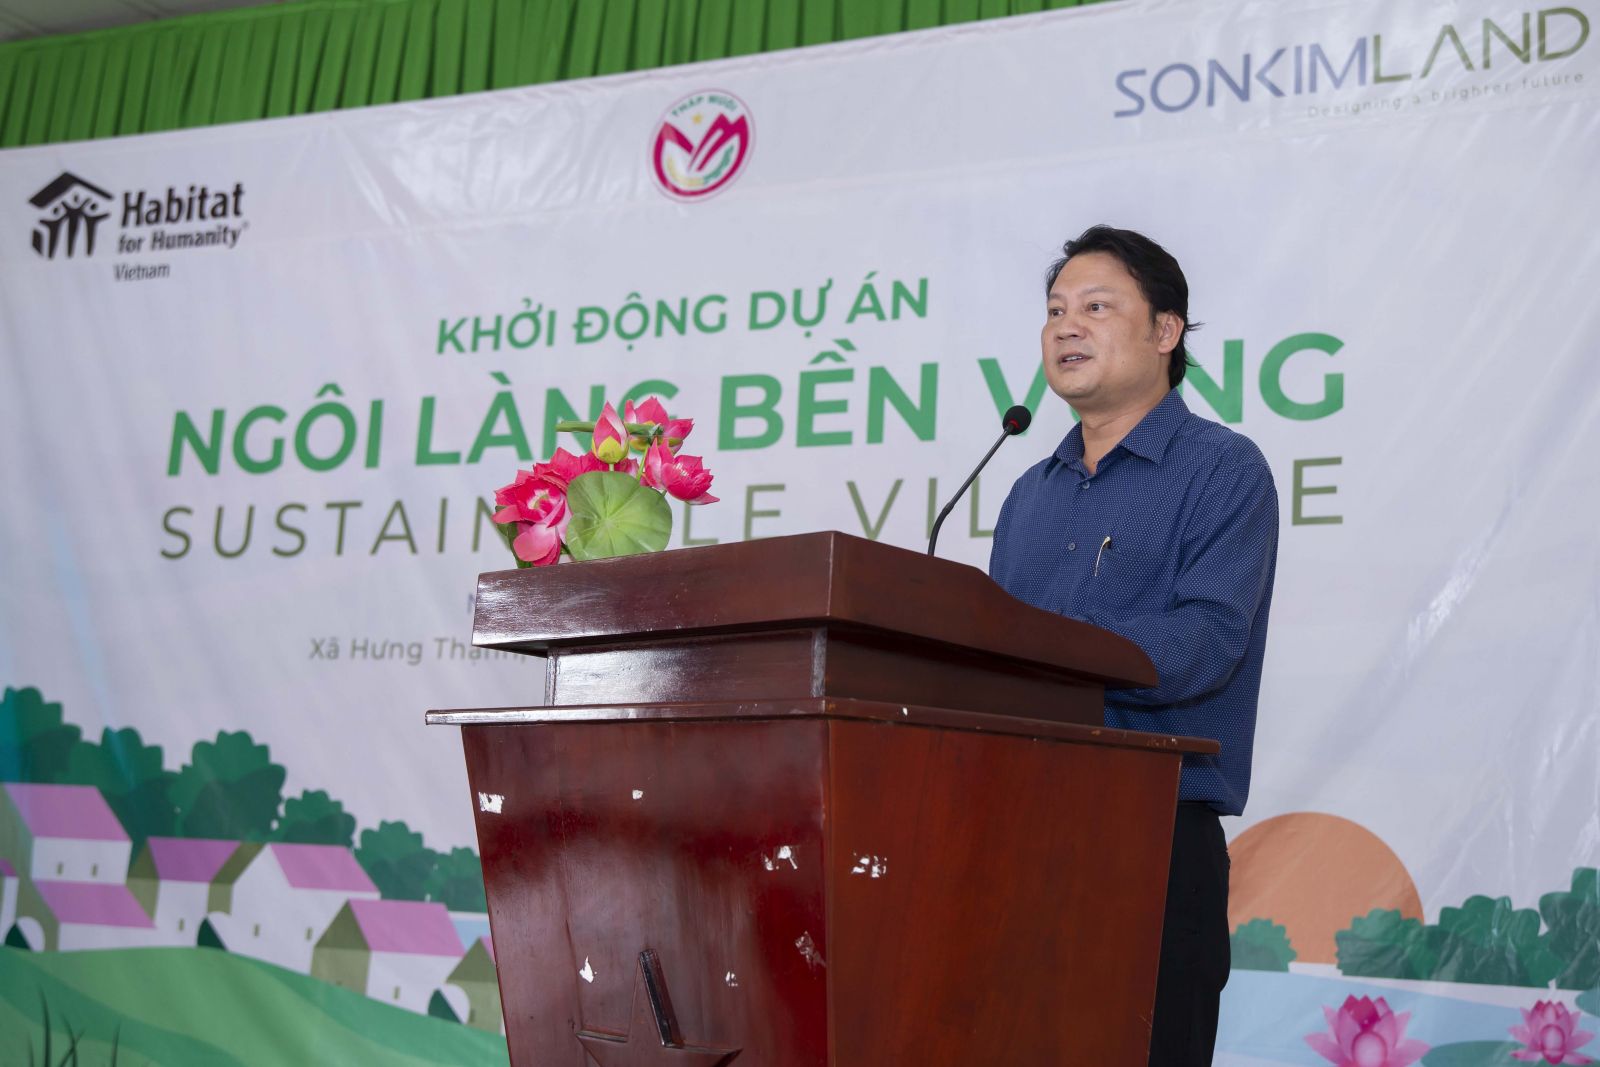 SUSTAINABLE VILLAGE: SonKim Land initiates and accompanies the CSR project "Sustainable Village"